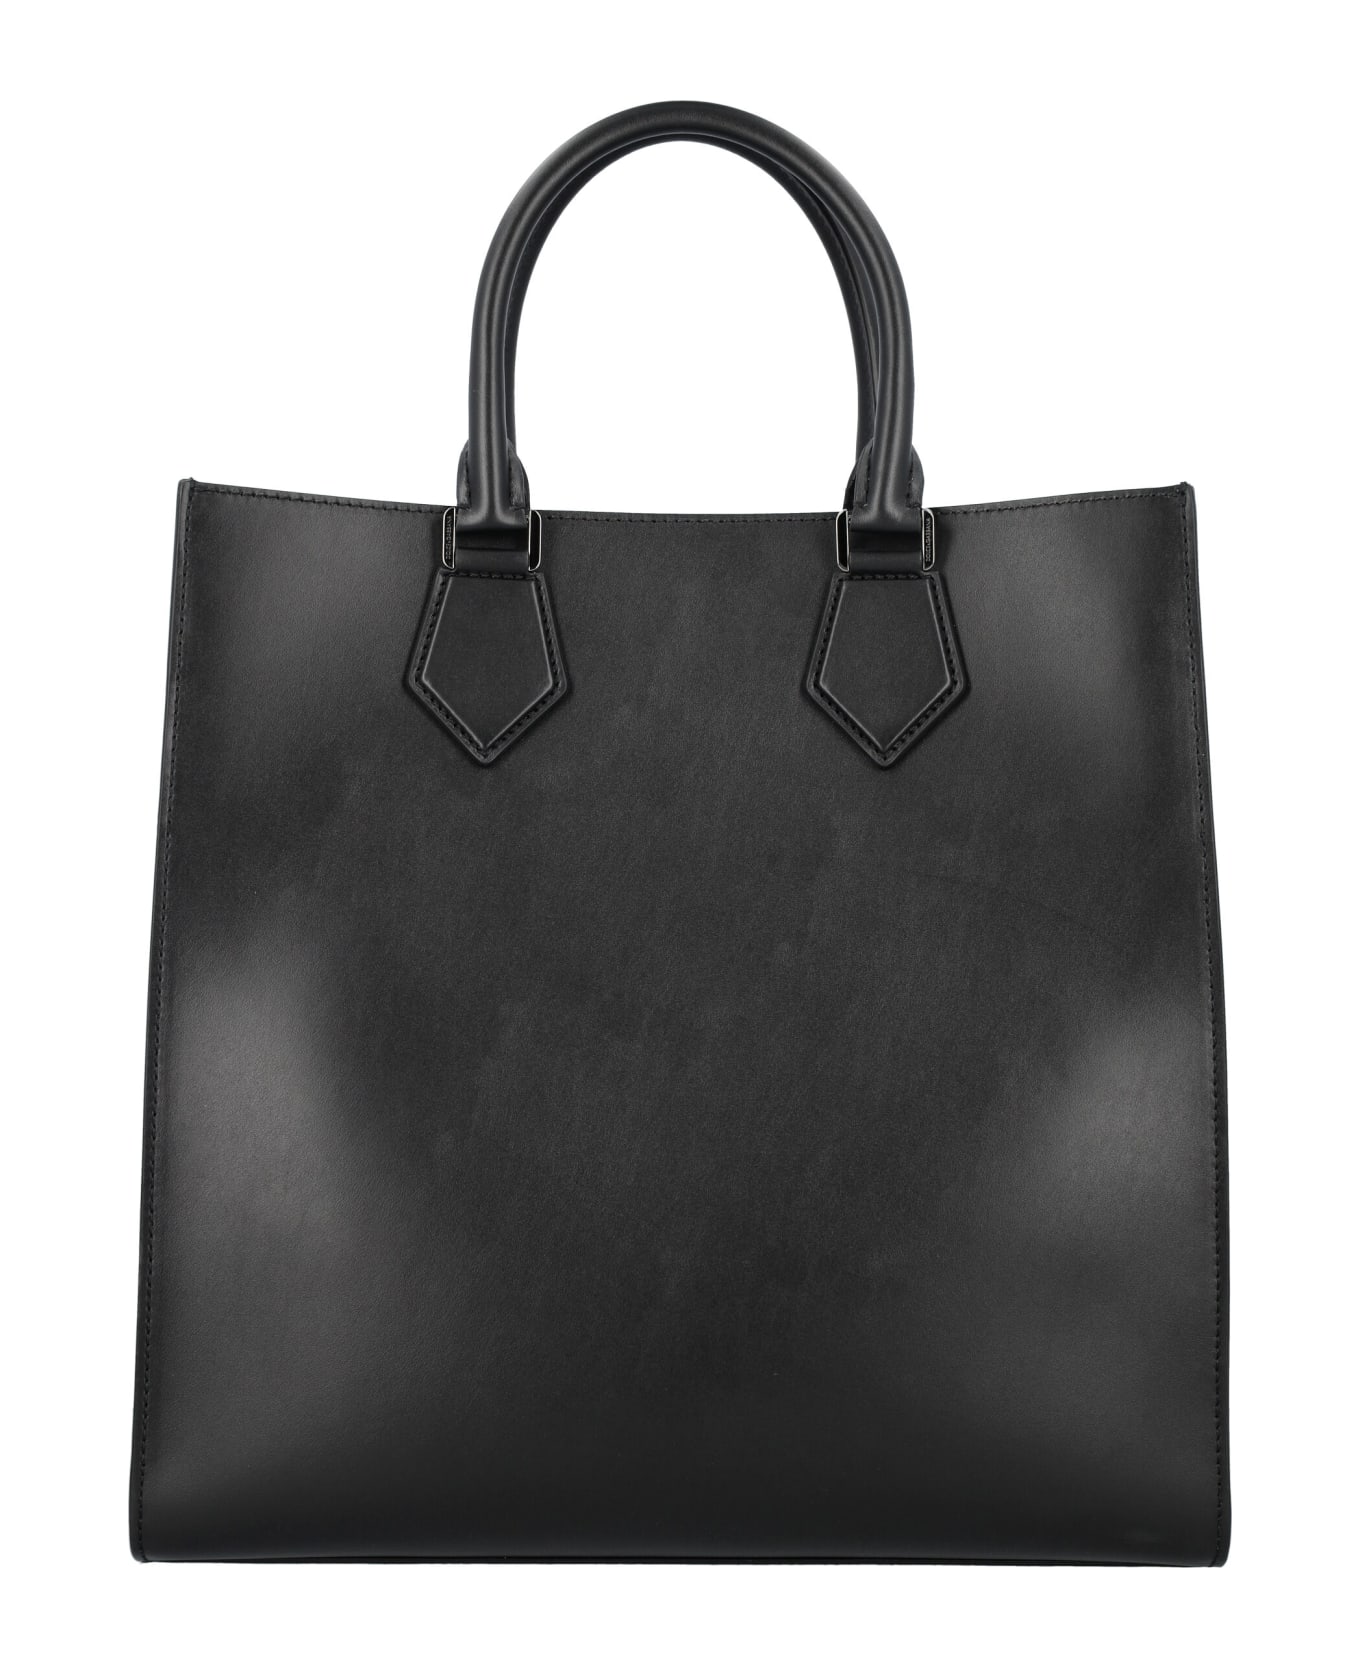 Dolce & Gabbana Raised Logo Tote Bag - BLACK